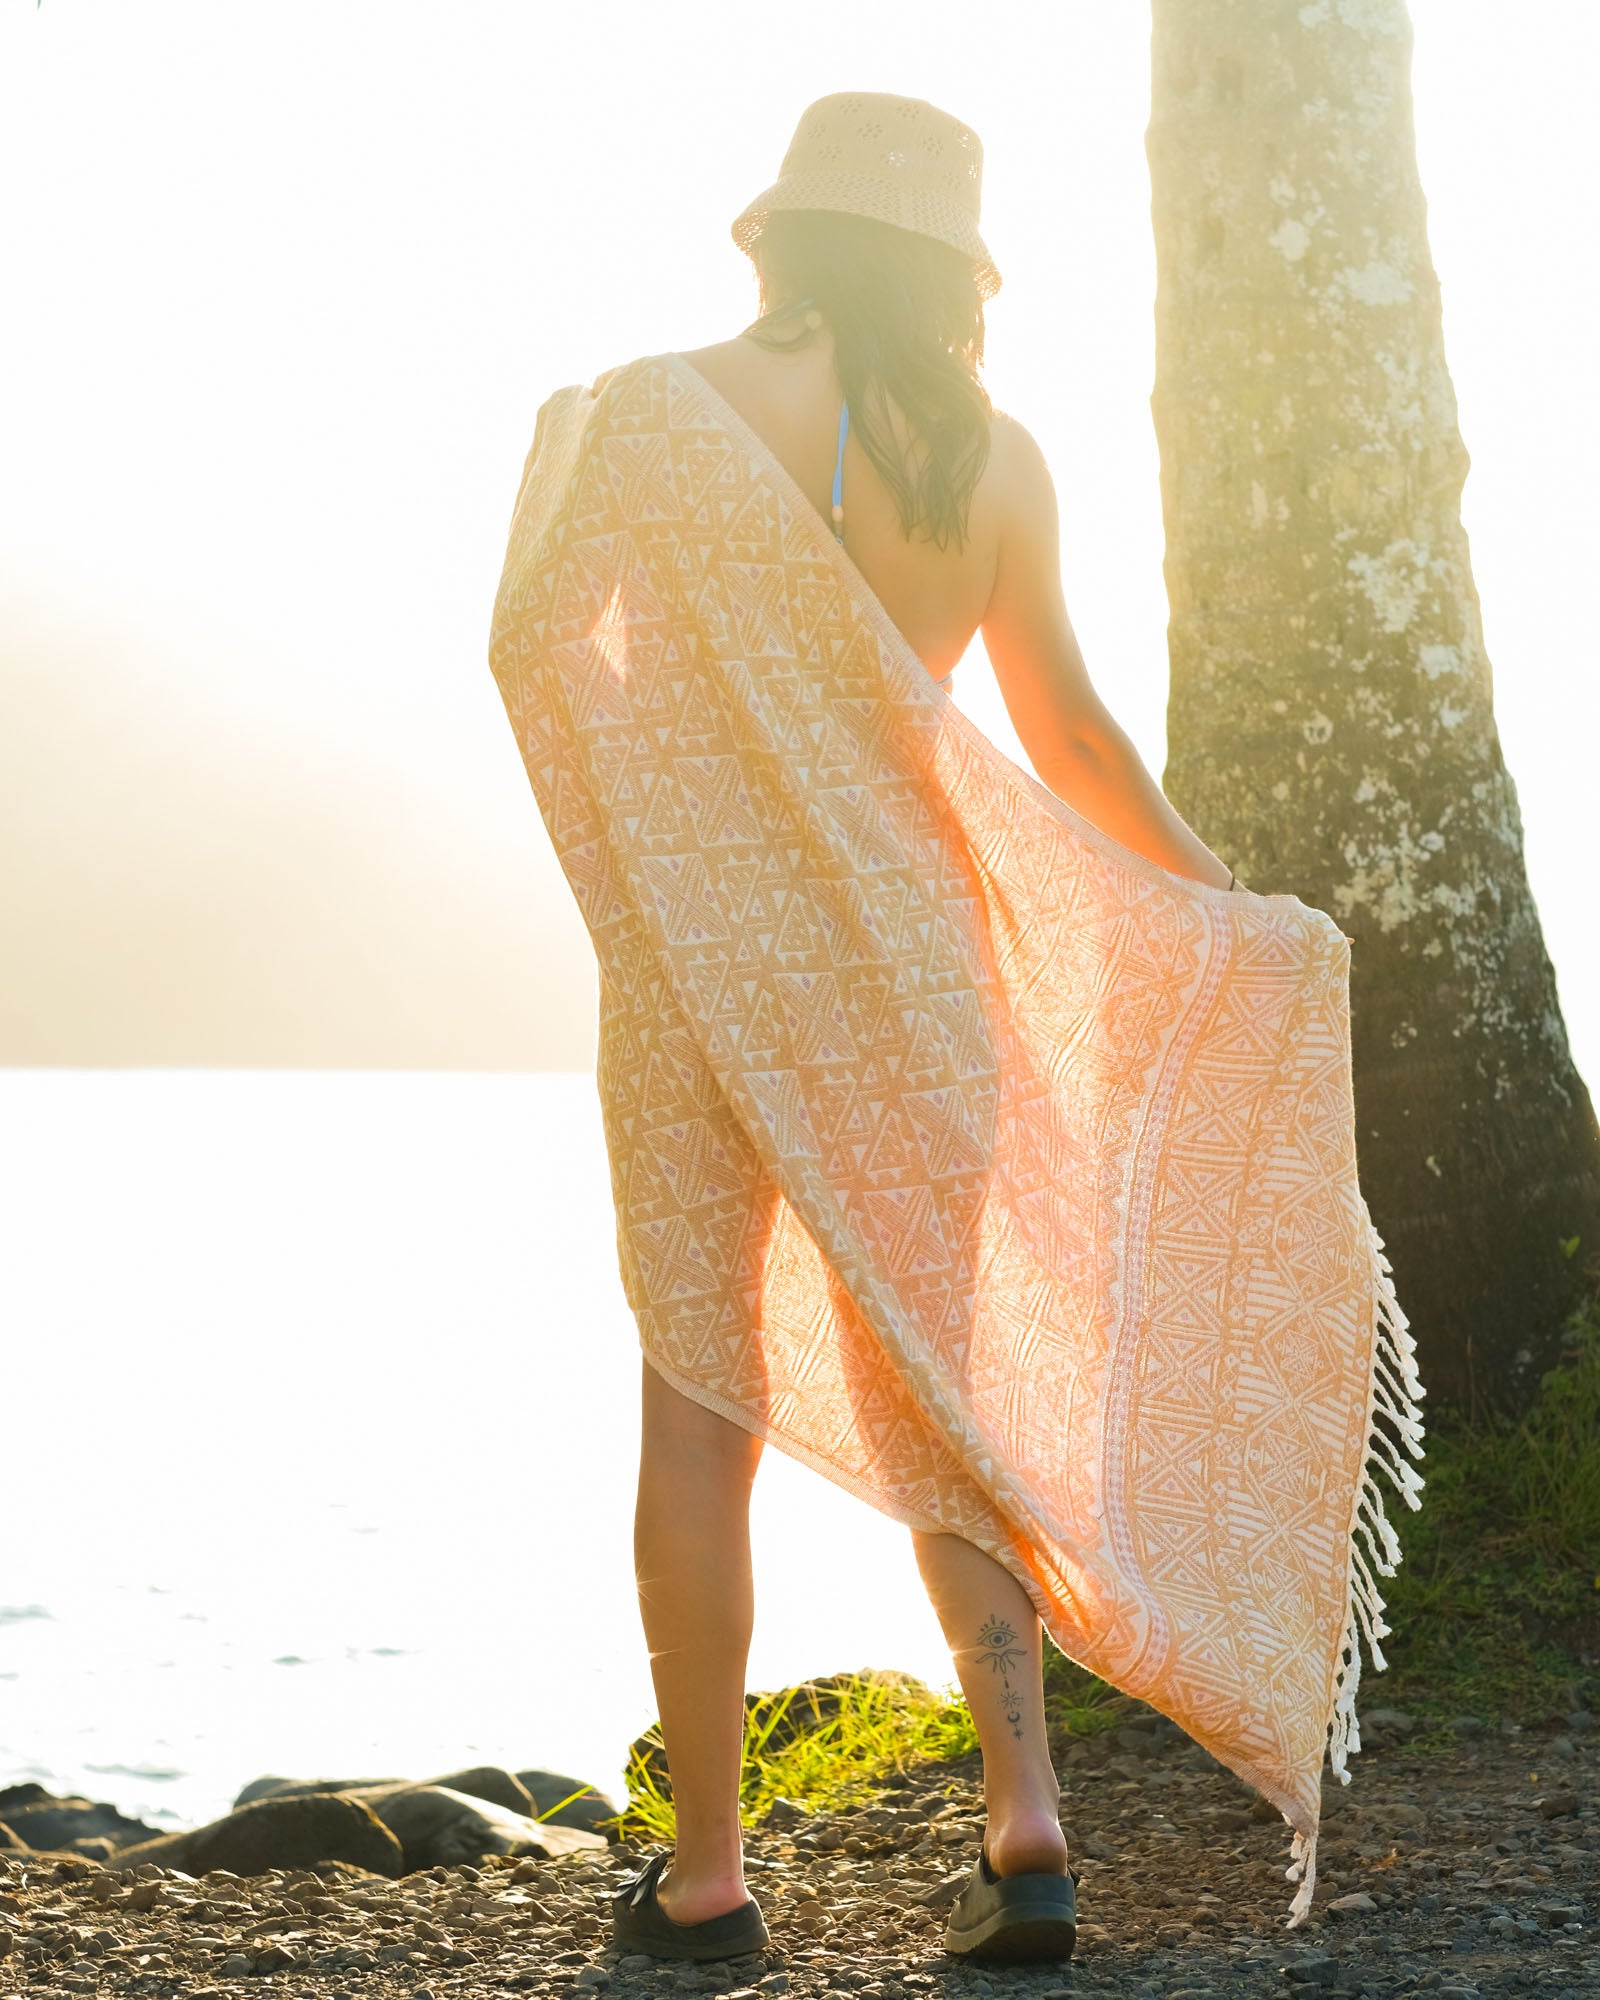 100% Organic Cotton Sunset Beach Towels